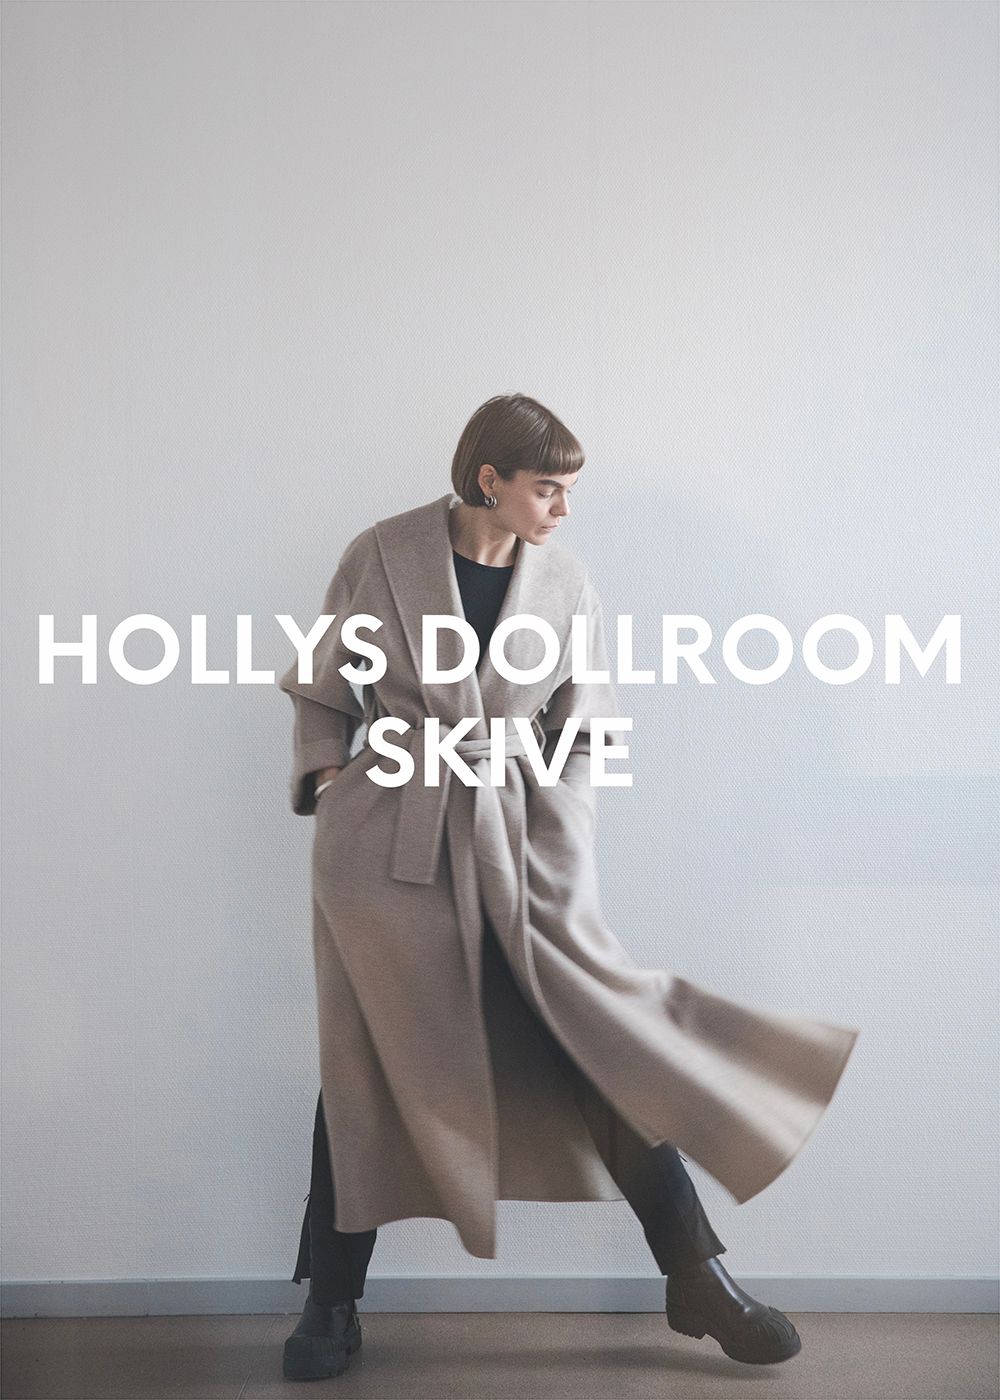 Hollys Dollroom in Skive, Denmark - Part of Byflou.com